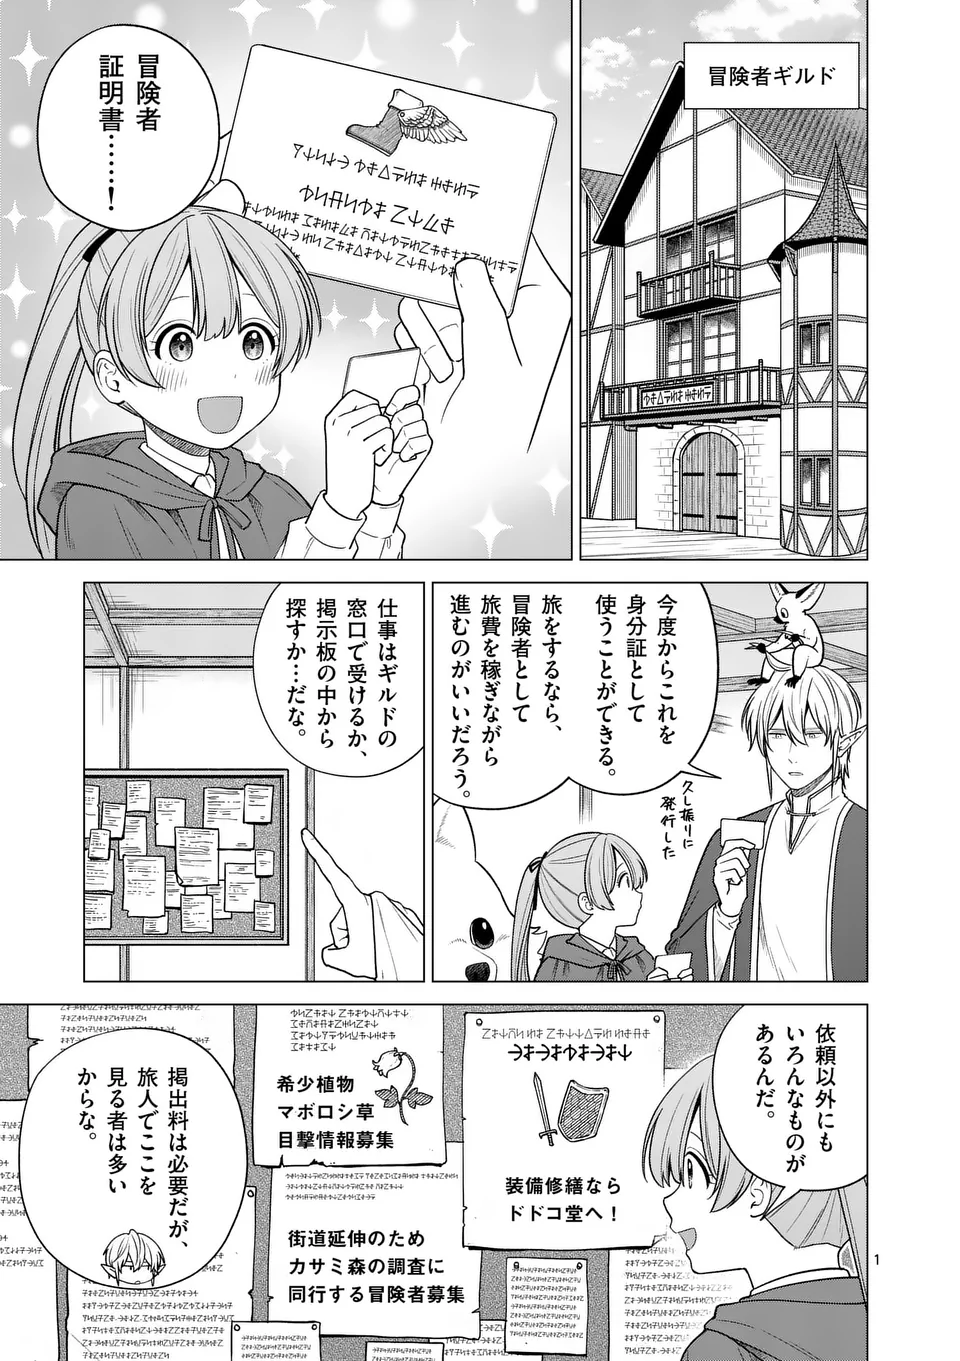 Isekai Pomeranian to Niji no Mofumofu Tabi - Chapter 8 - Page 1